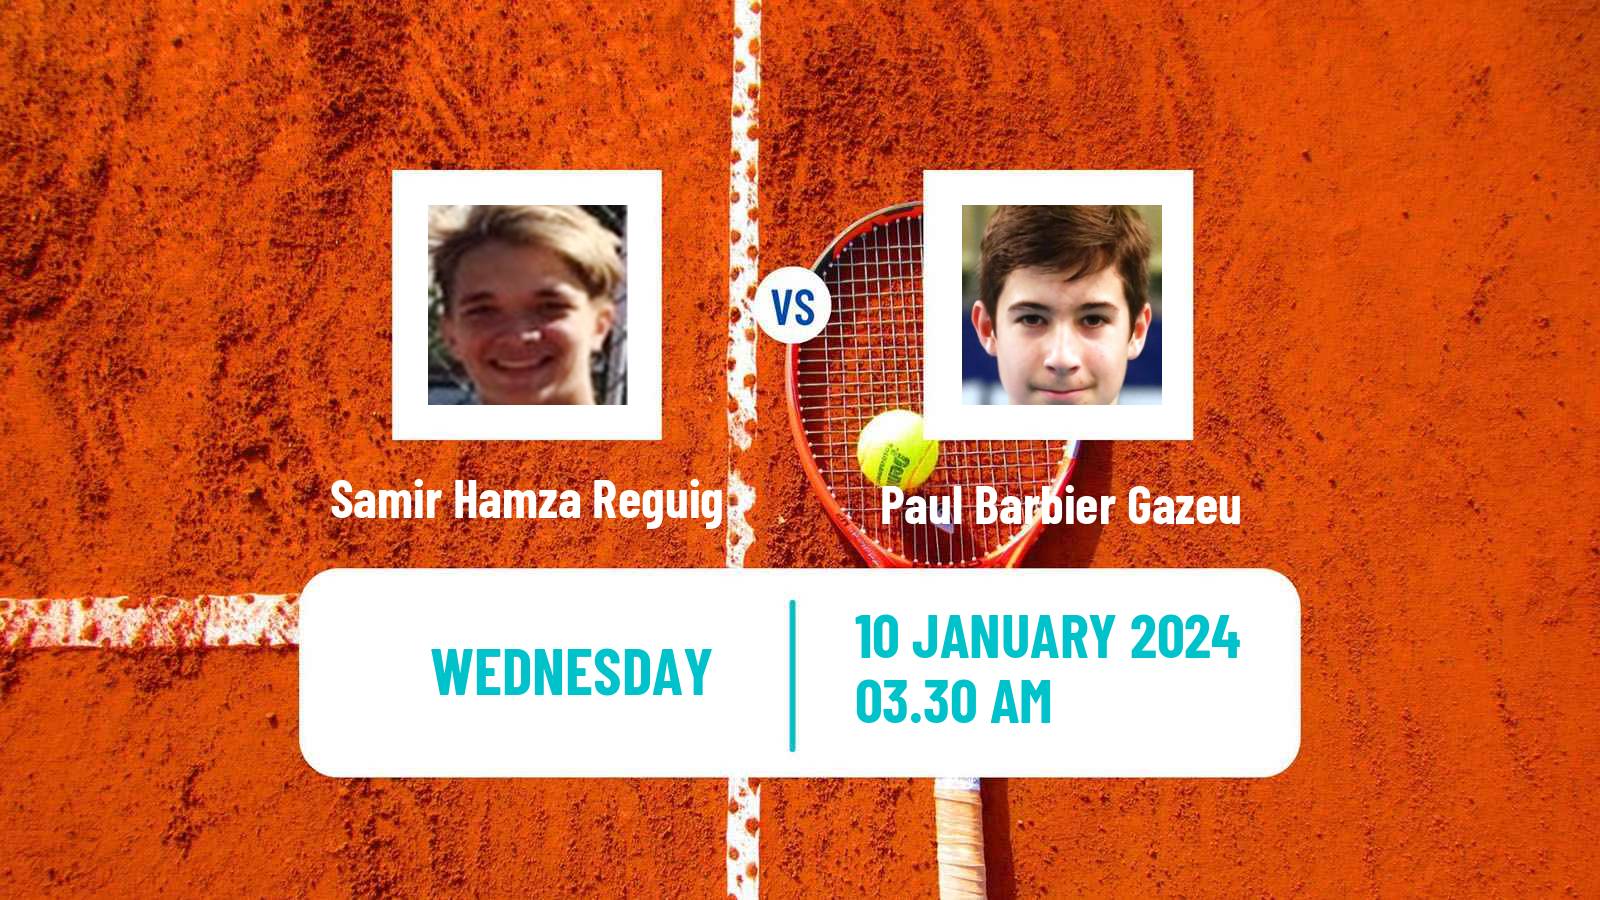 Tennis ITF M15 Monastir 2 Men Samir Hamza Reguig - Paul Barbier Gazeu